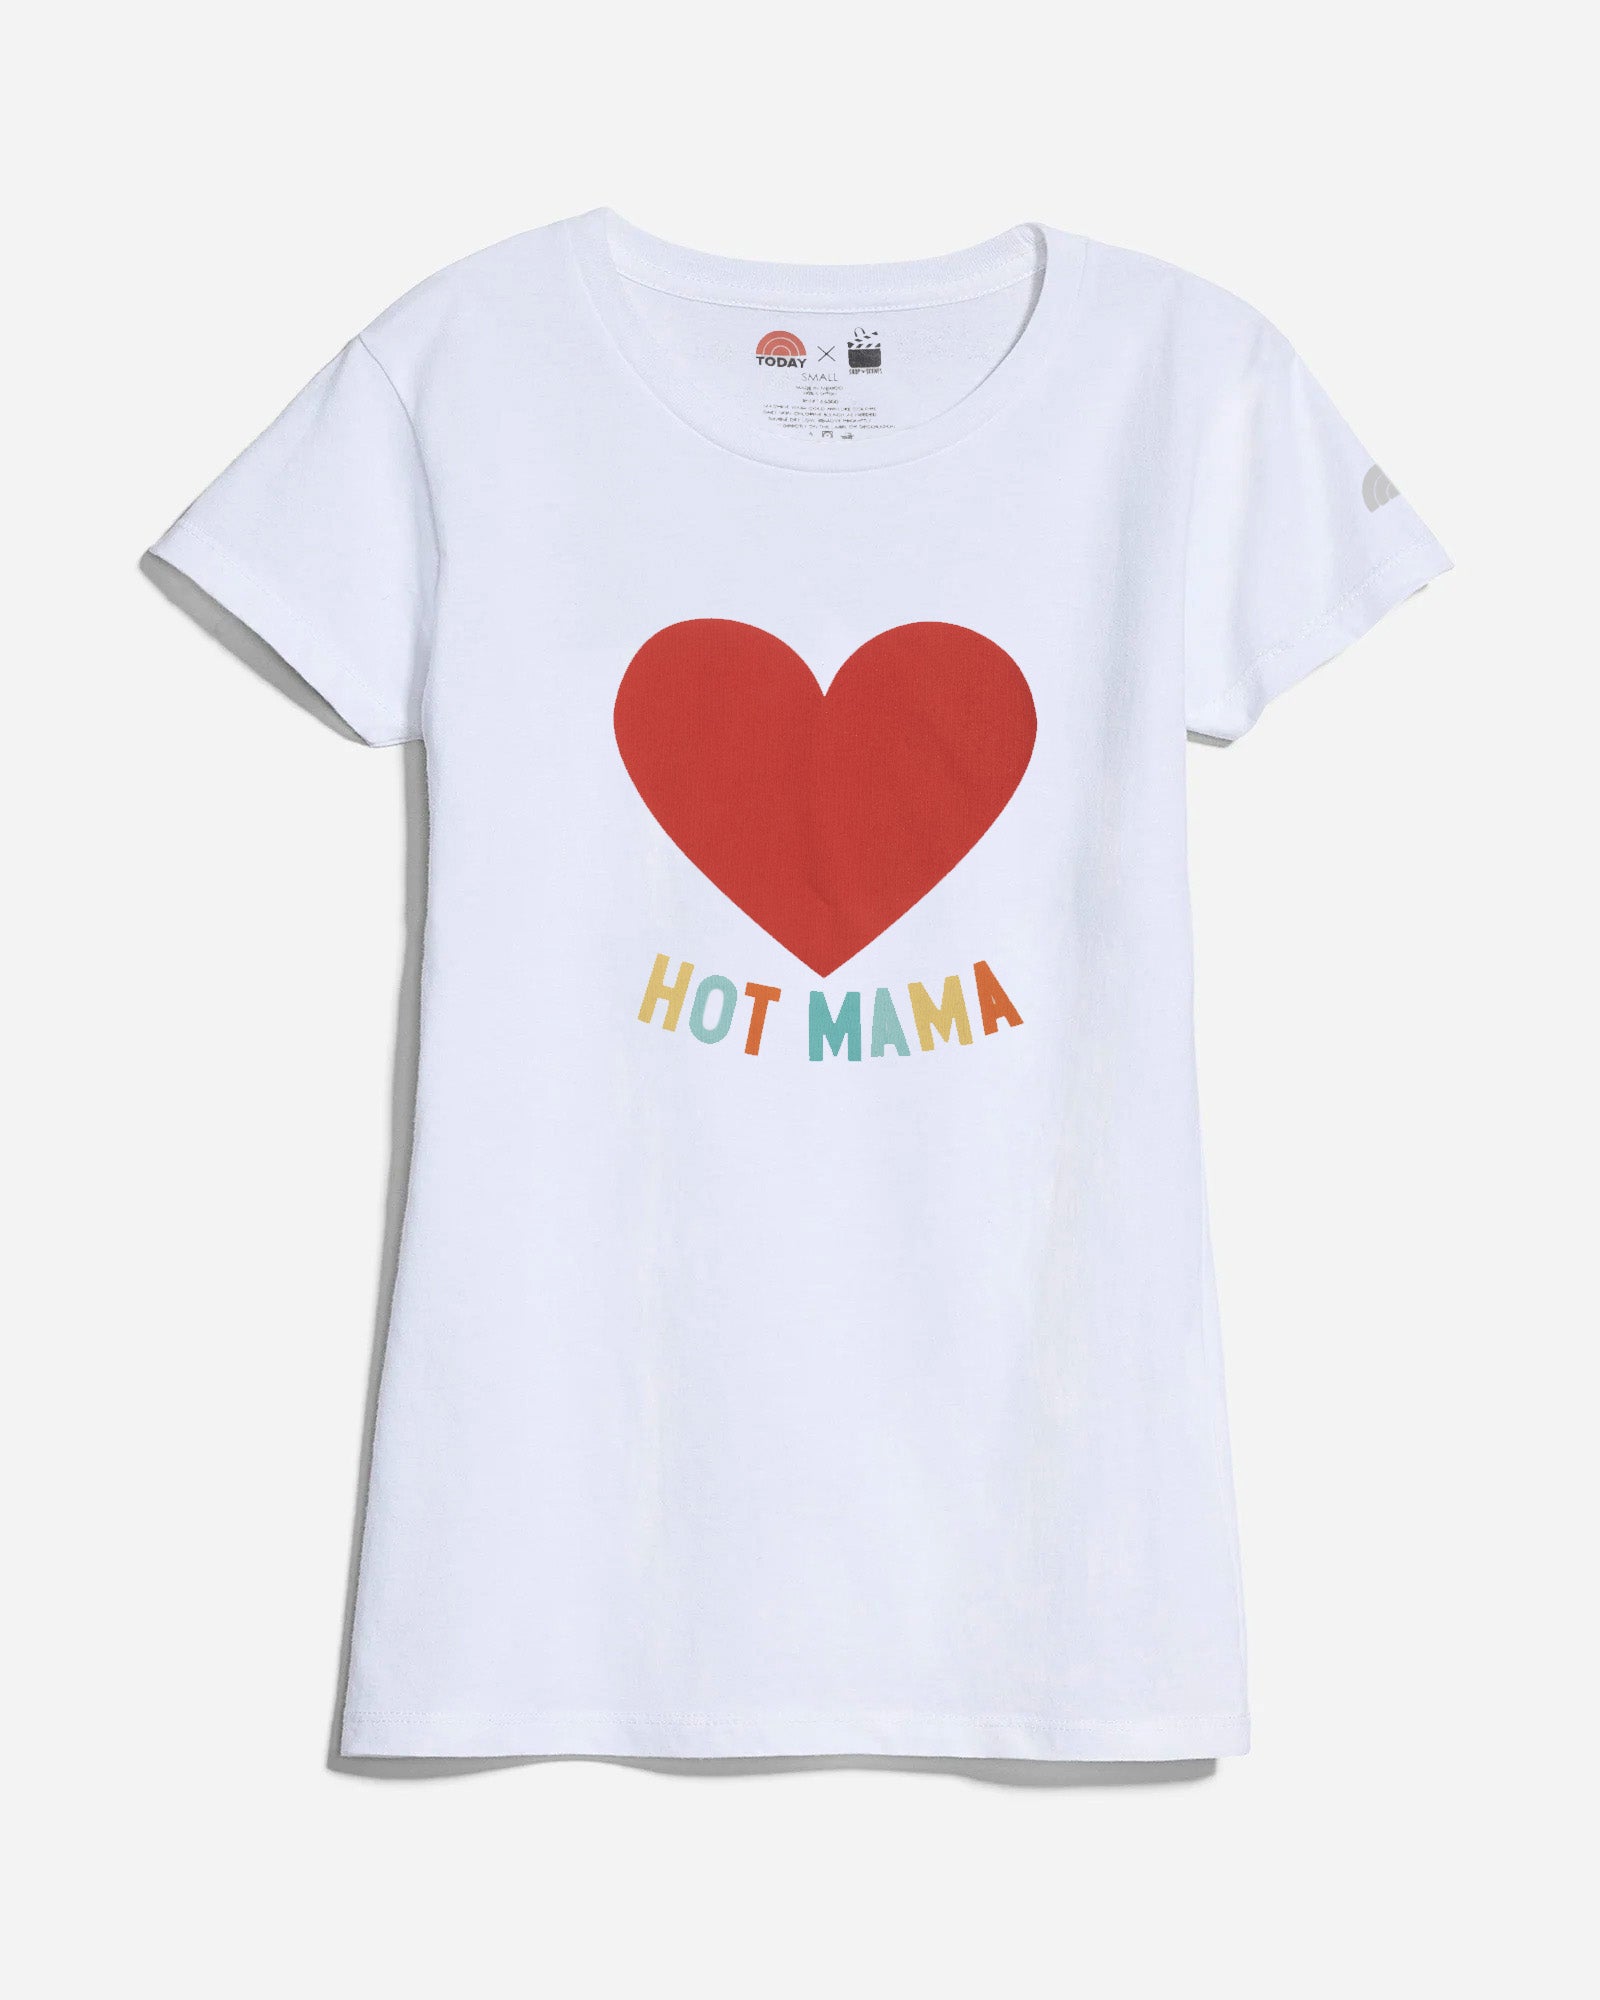 TODAY Hot Mama Women's Classic Tee